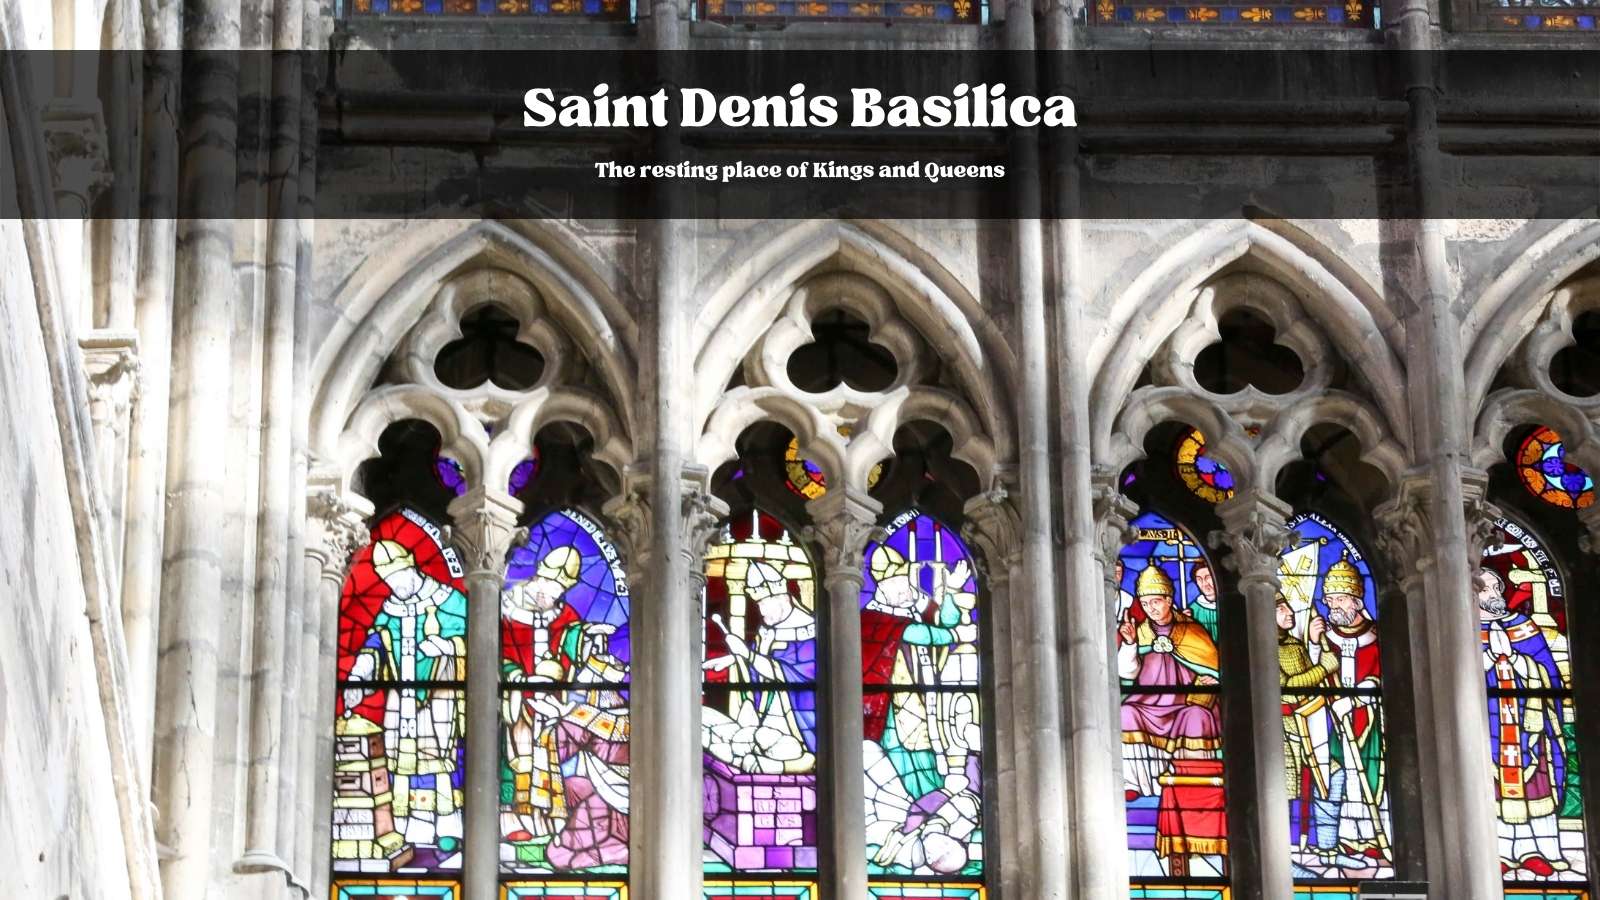 Saint Denis Basilica stained glass windows